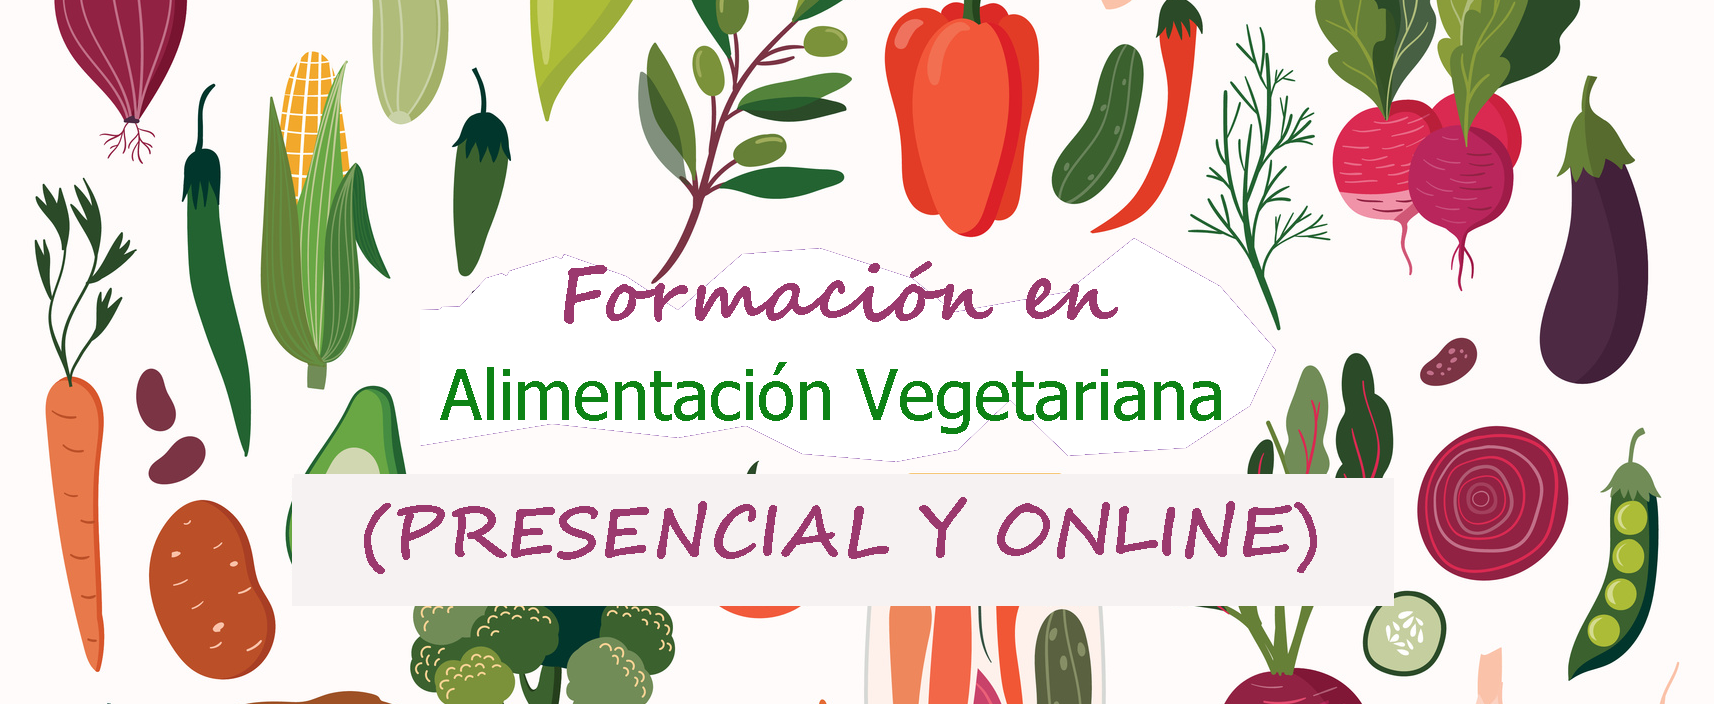 Formación en Alimentación Vegetariana (información)